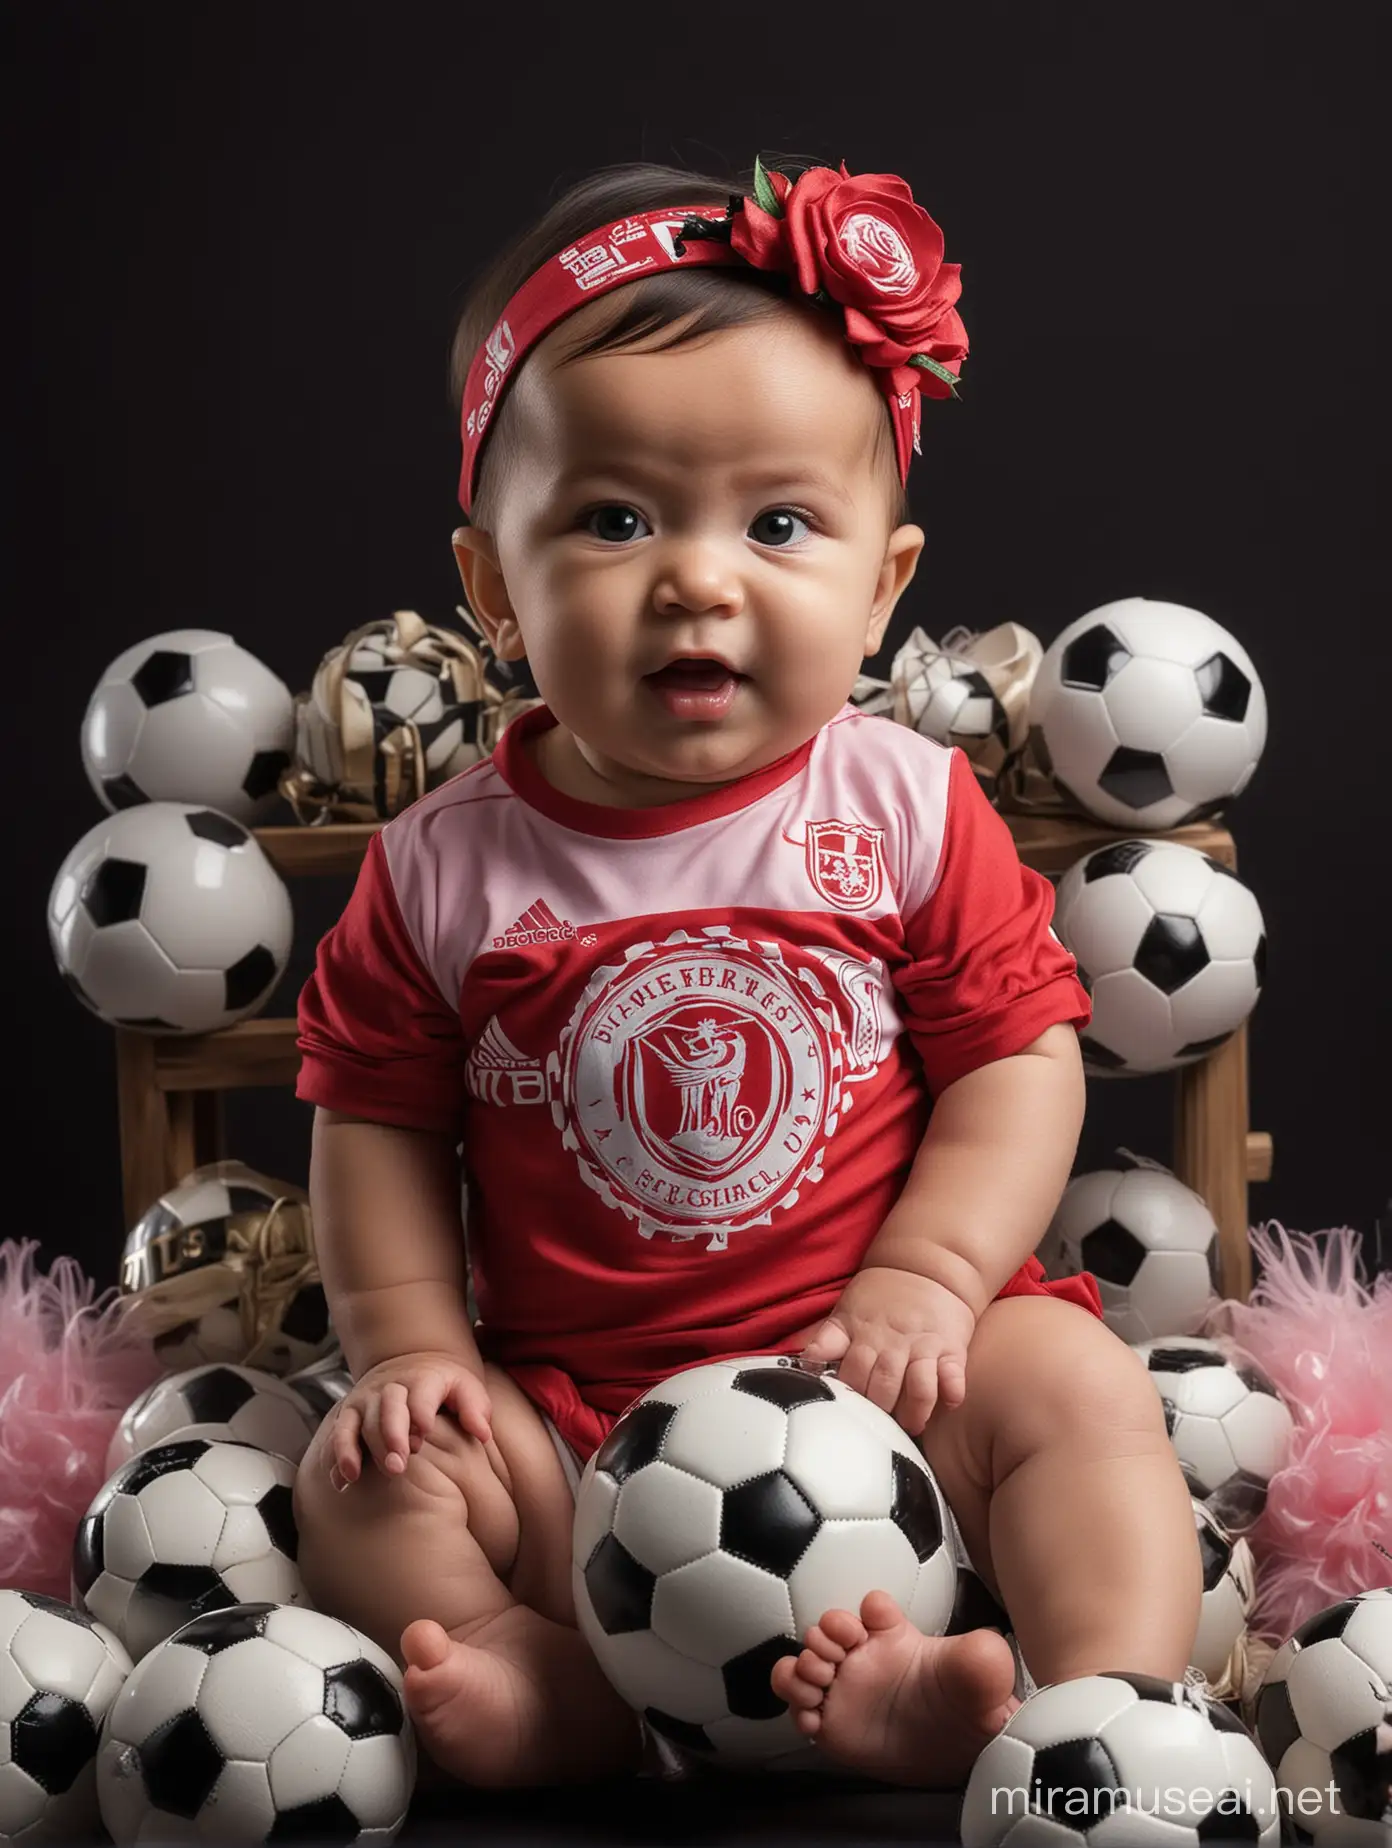 Chubby Newborn Baby Girl Supporting PSM Makassar Soccer Team with Rose Headband and Merchandise